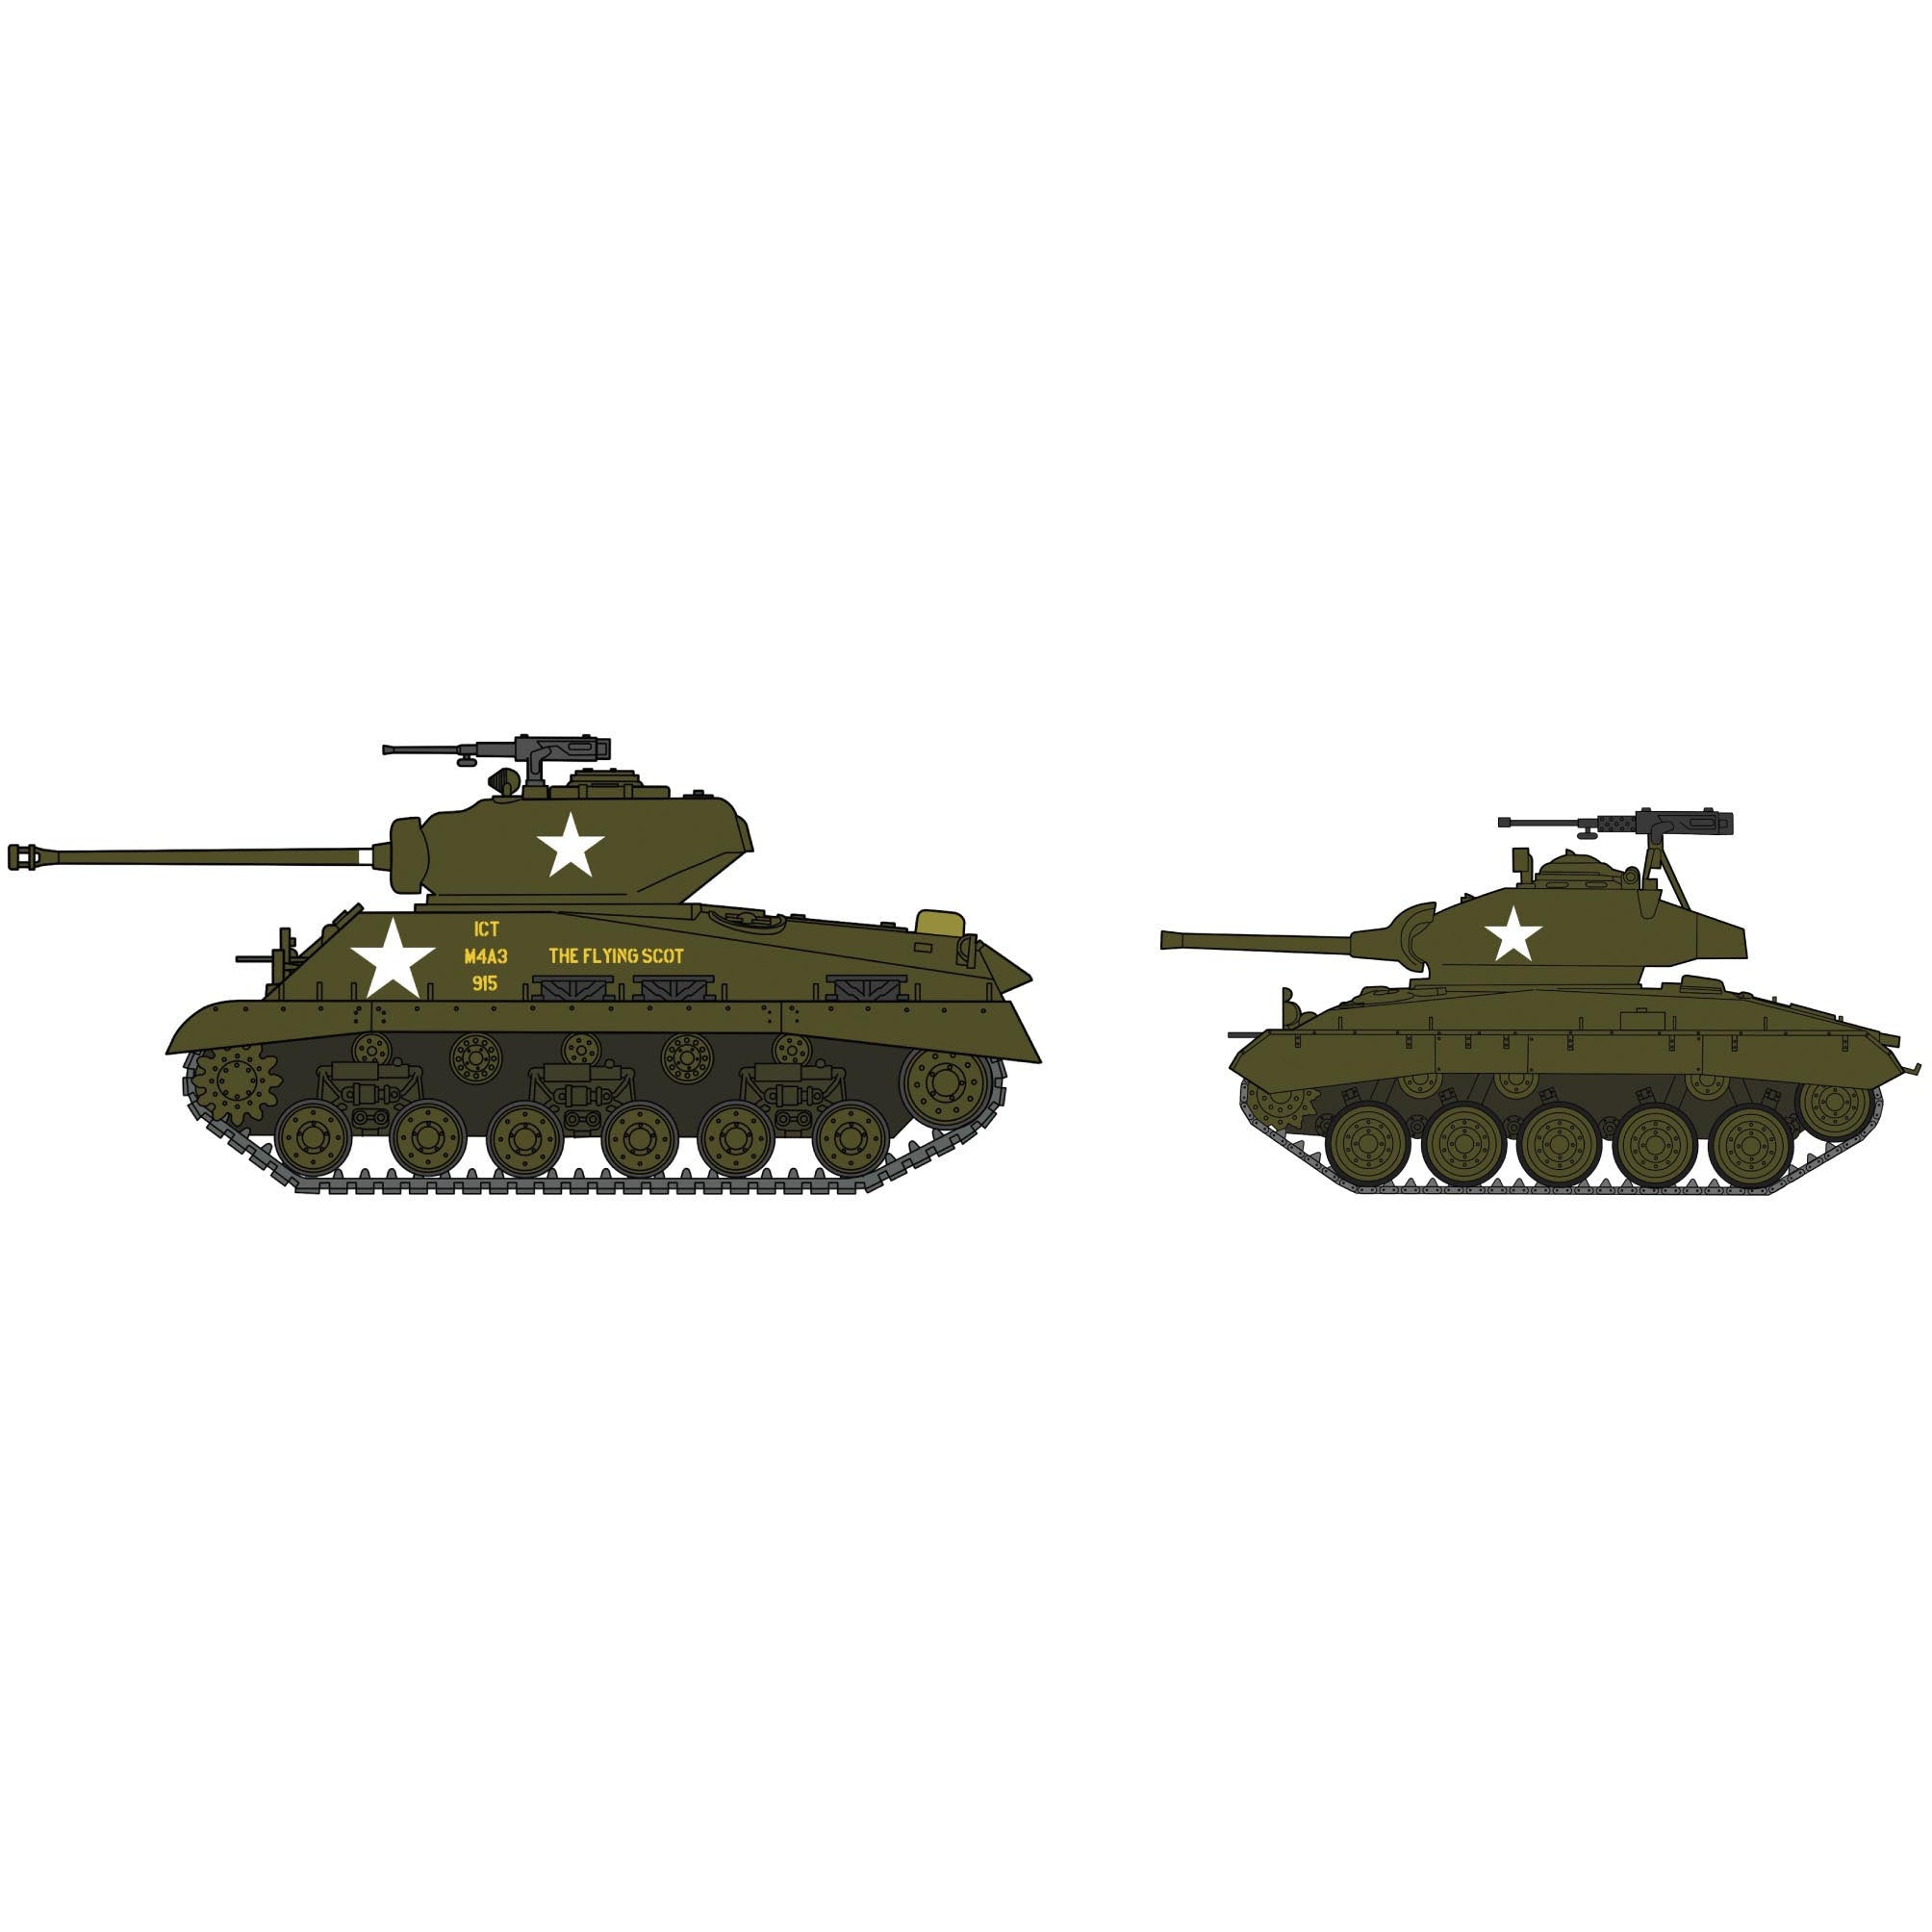 M4A3E8 Sherman & M24 Chaffee "US Army Main Battle Tank Combo" 2 in 1 Tank 1/72 #30068 by Hasegawa